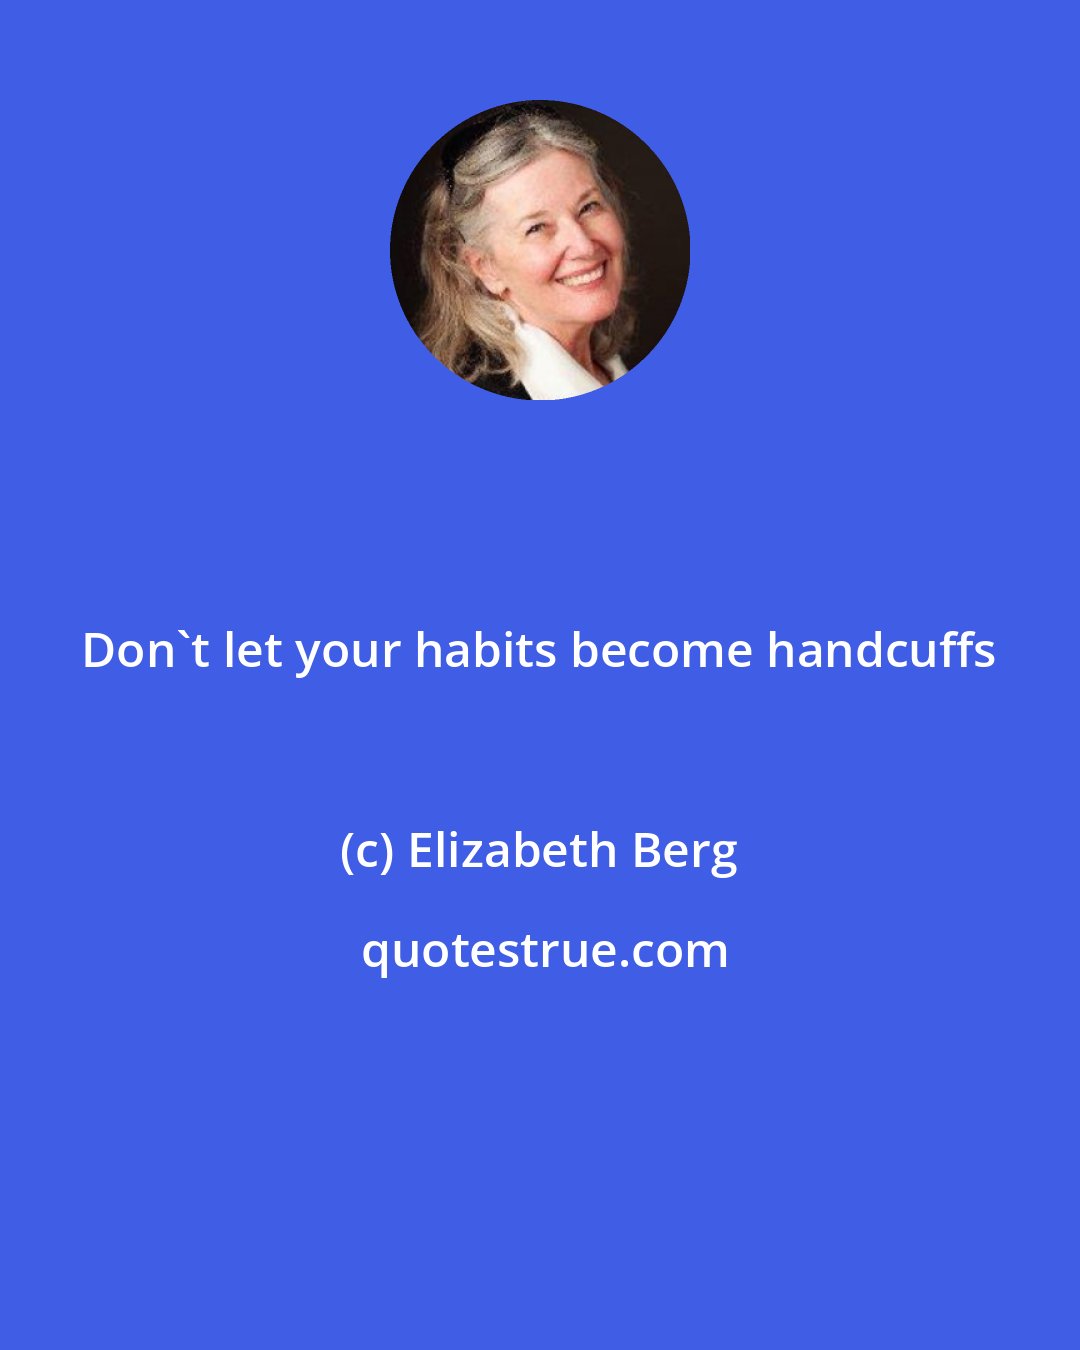 Elizabeth Berg: Don't let your habits become handcuffs